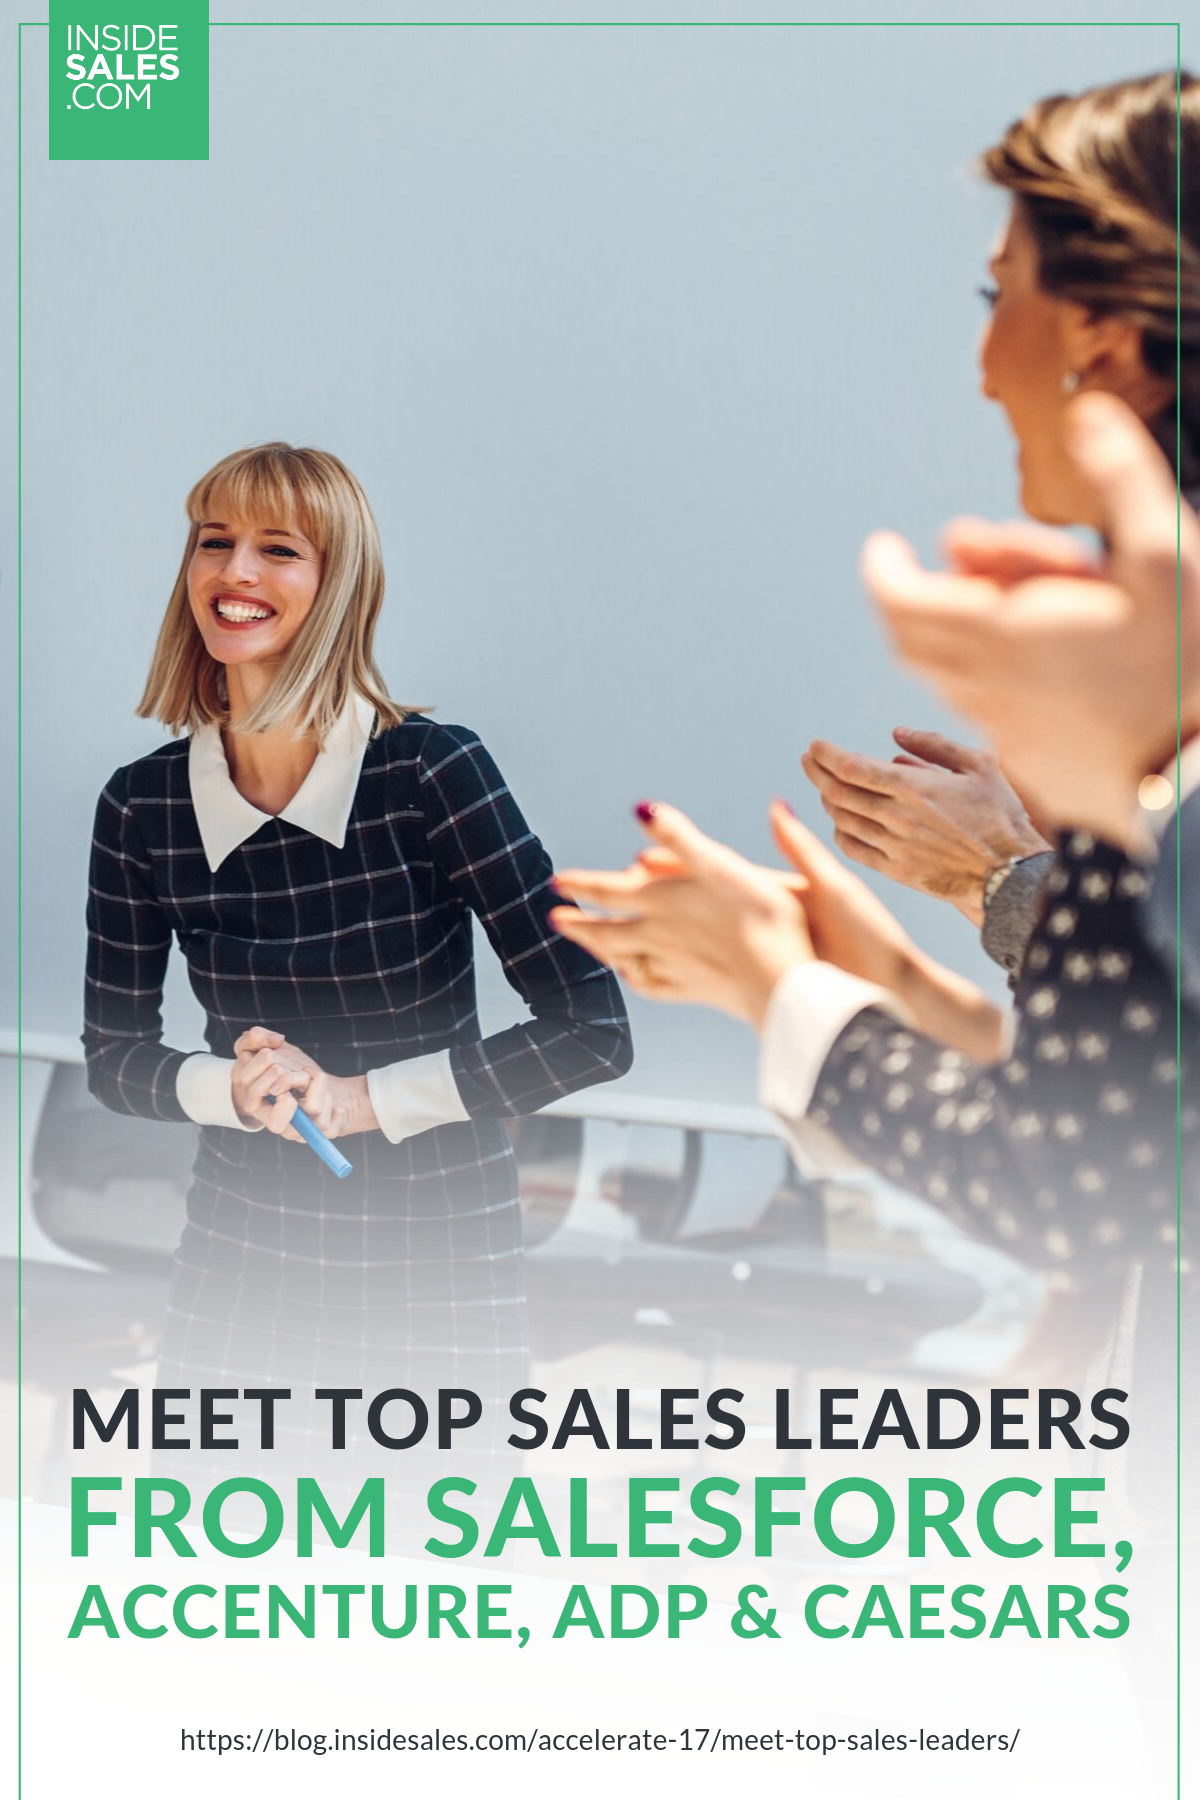 Meet Top Sales Leaders From Salesforce, Accenture, ADP & Caesars https://www.insidesales.com/blog/accelerate-17/meet-top-sales-leaders/